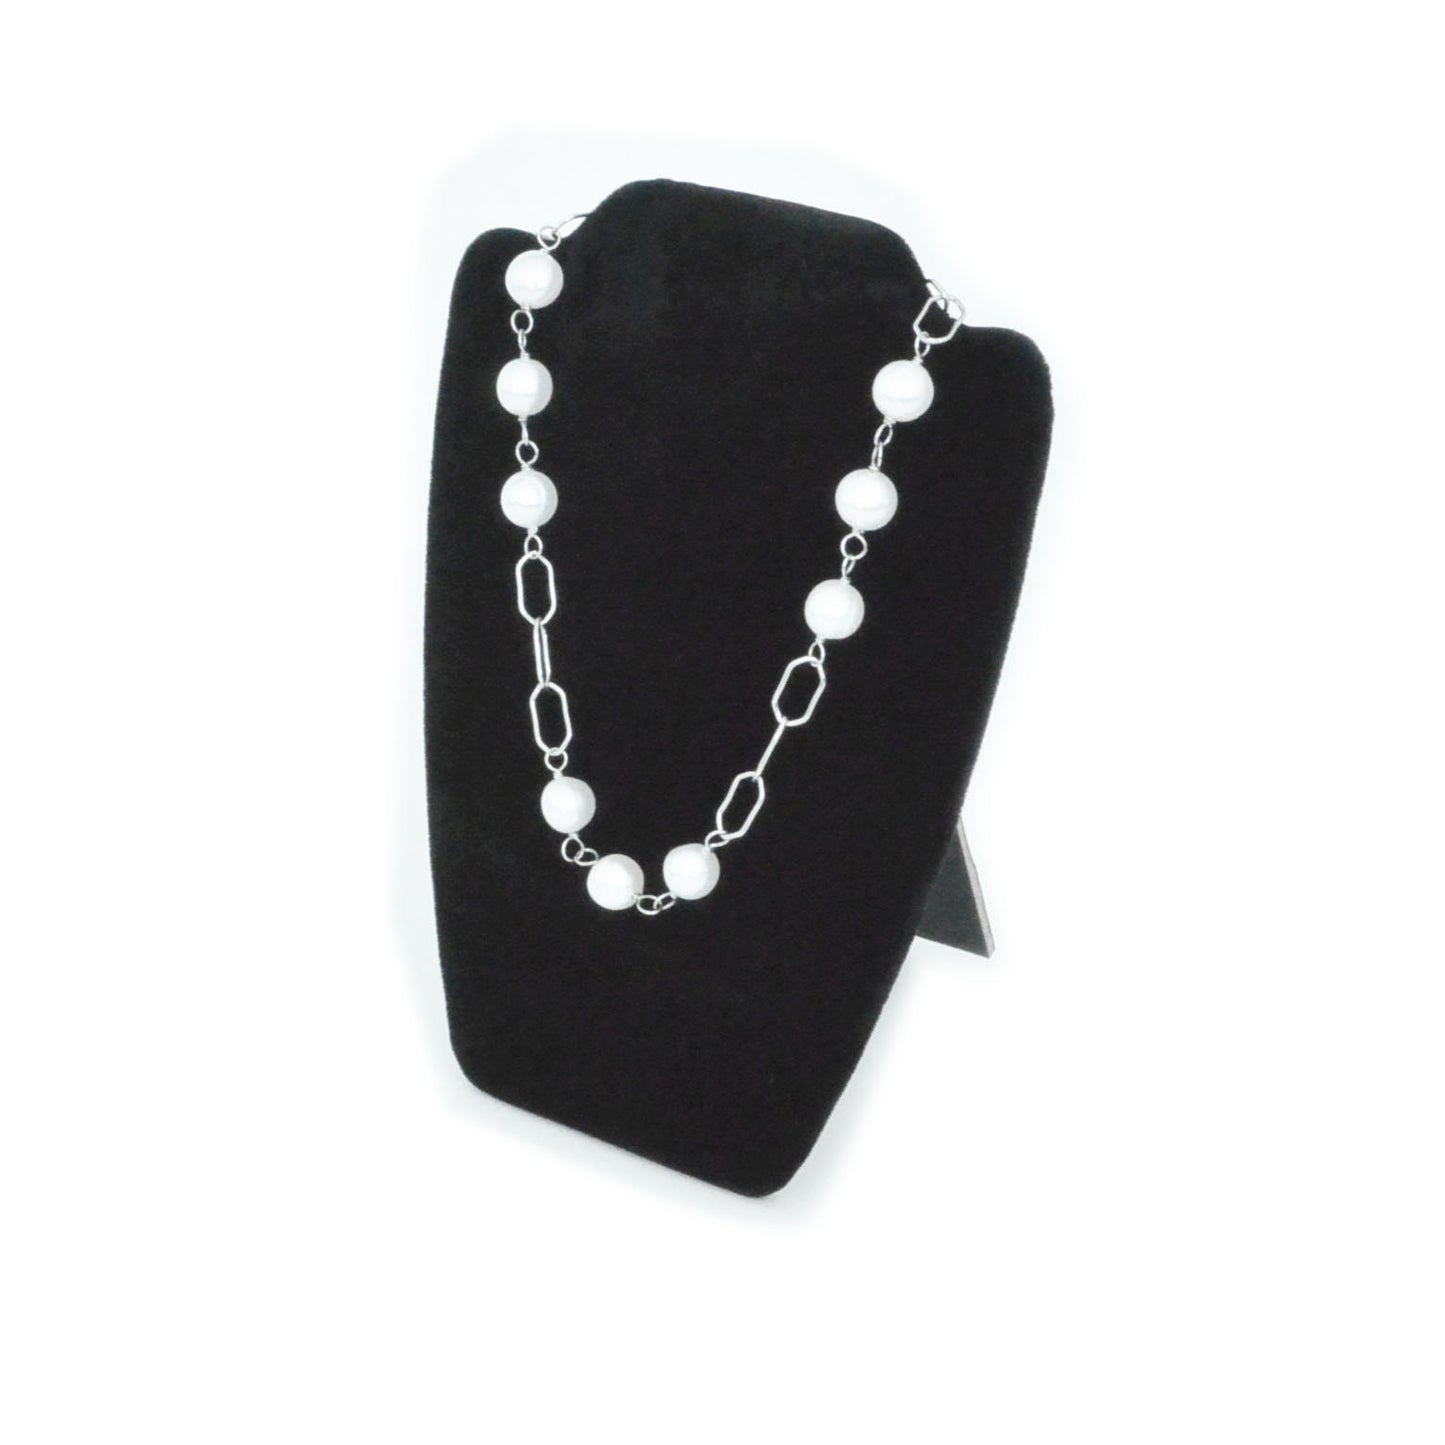 4x5 1/4" Single Necklace Black Velvet Easel Stand